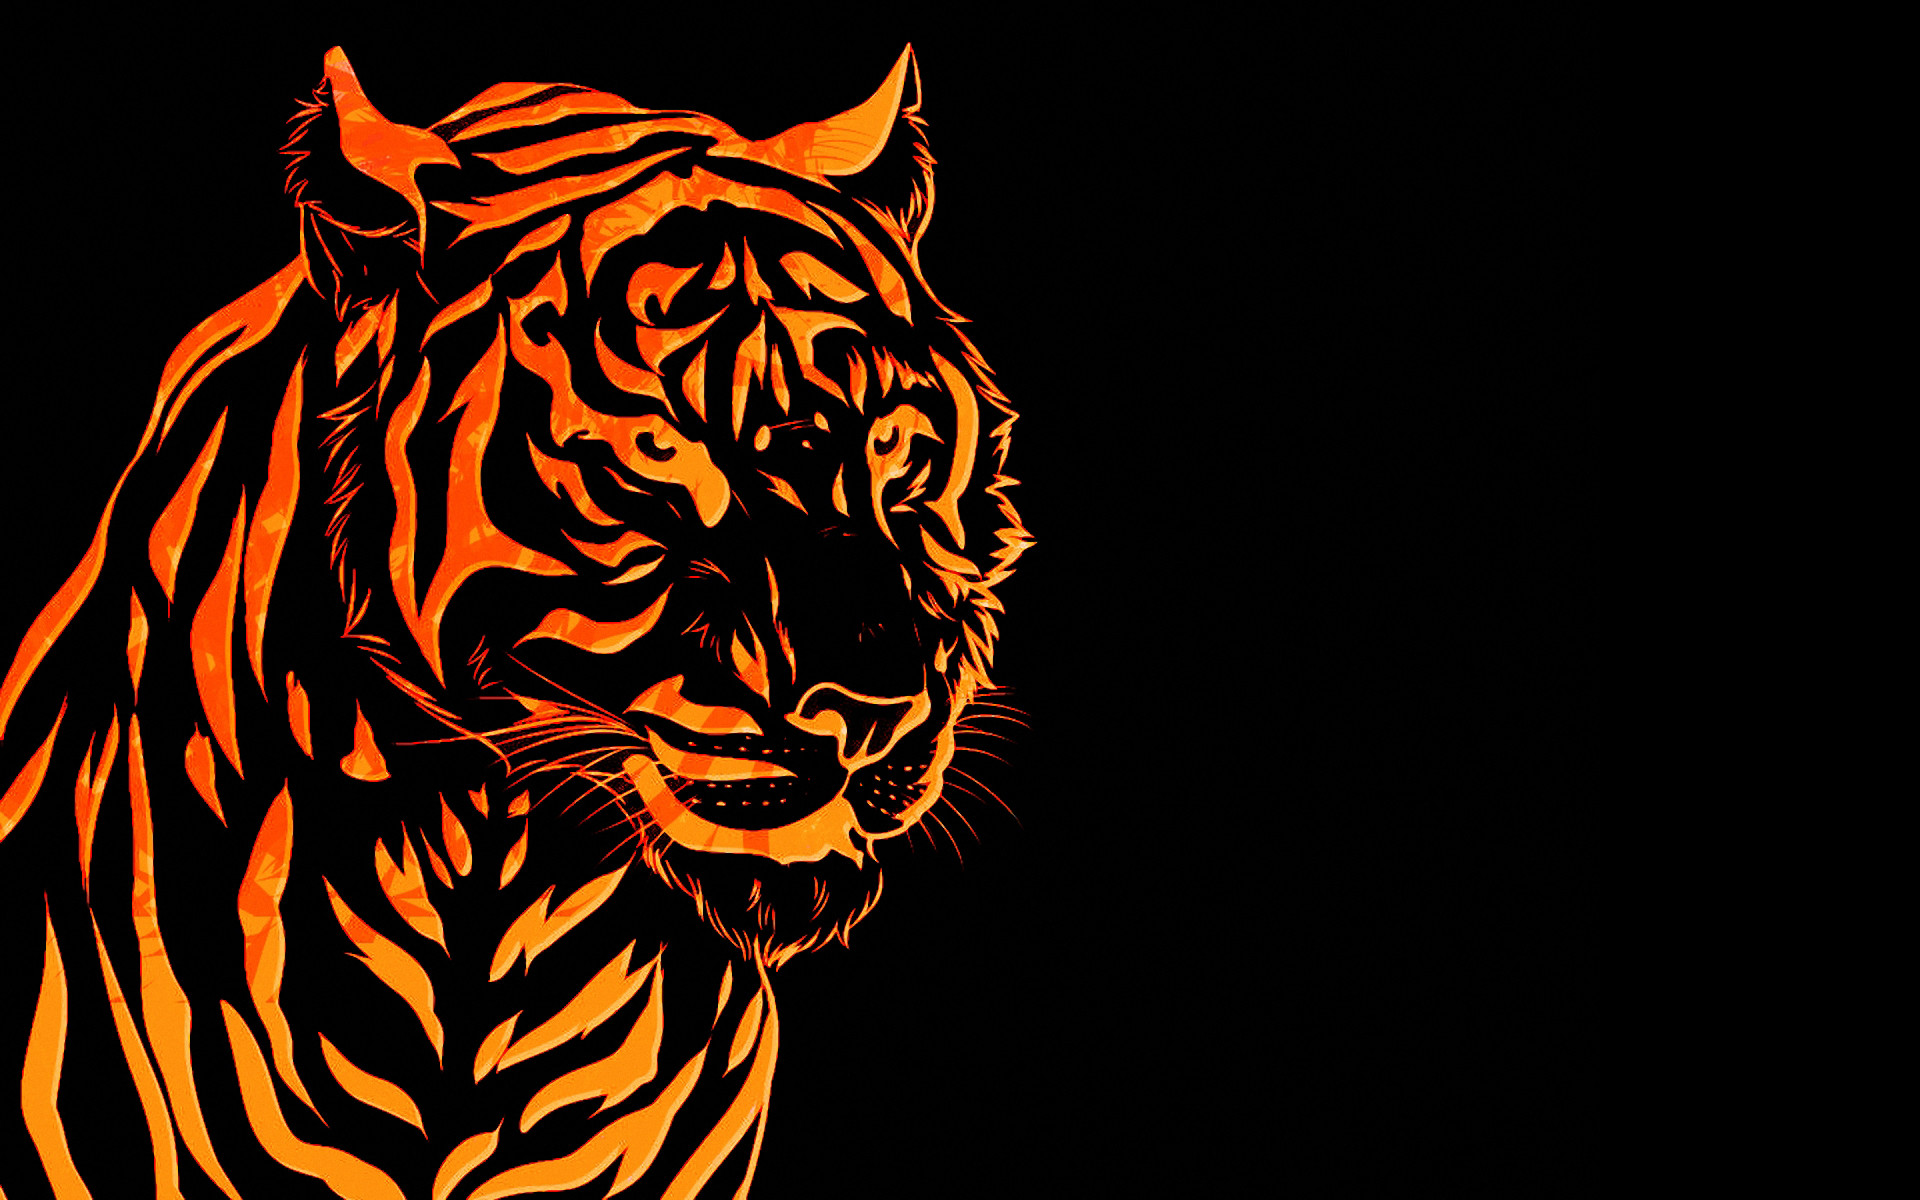 1920x1200 Tiger HD Wallpapers For Desktop Group 1920Ã1200 Tiger Image Wallpapers (38  Wallpapers)